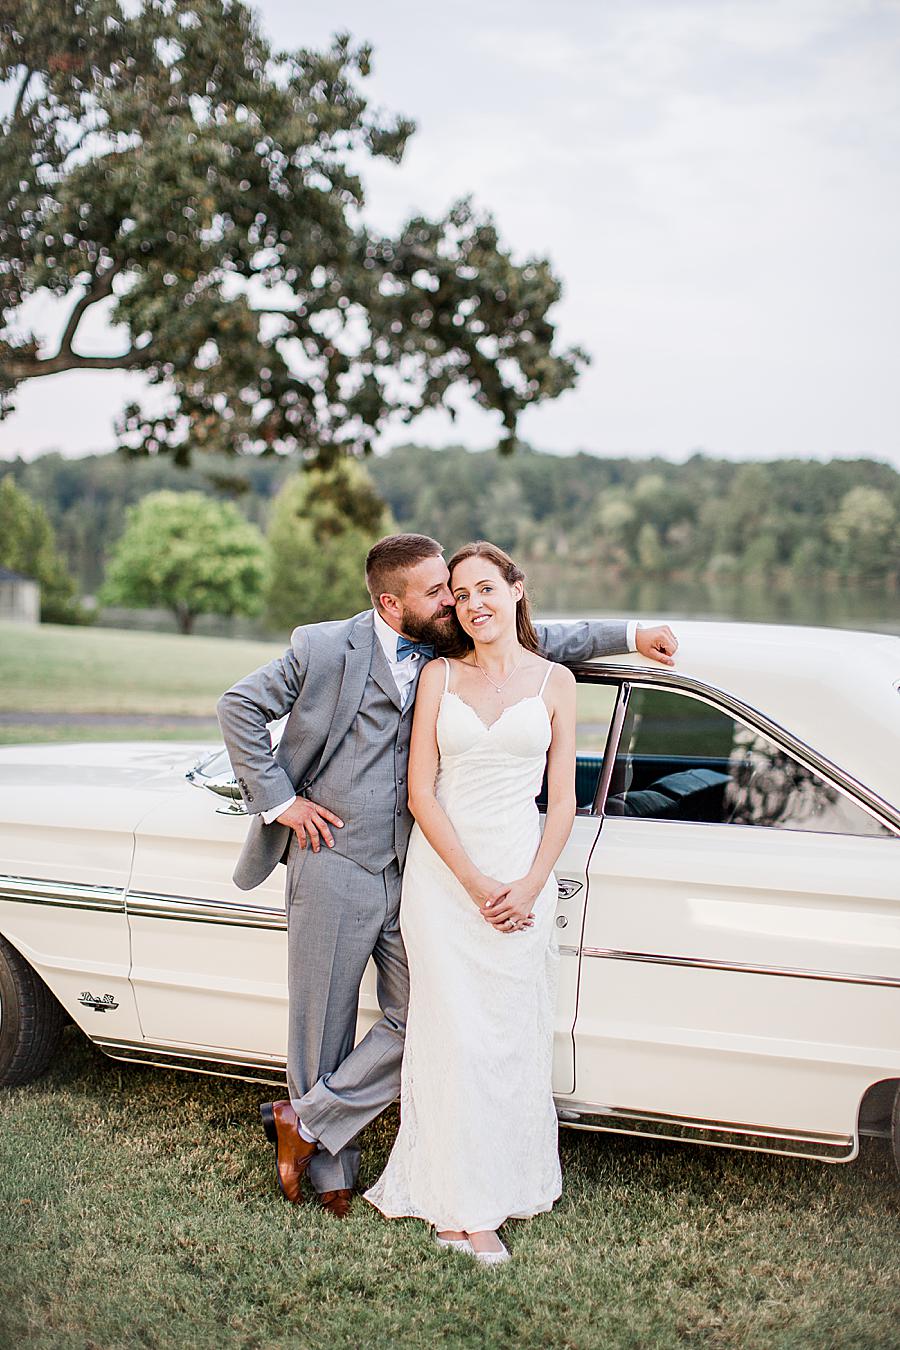 Vintage getaway car by Knoxville Wedding Photographer, Amanda May Photos.